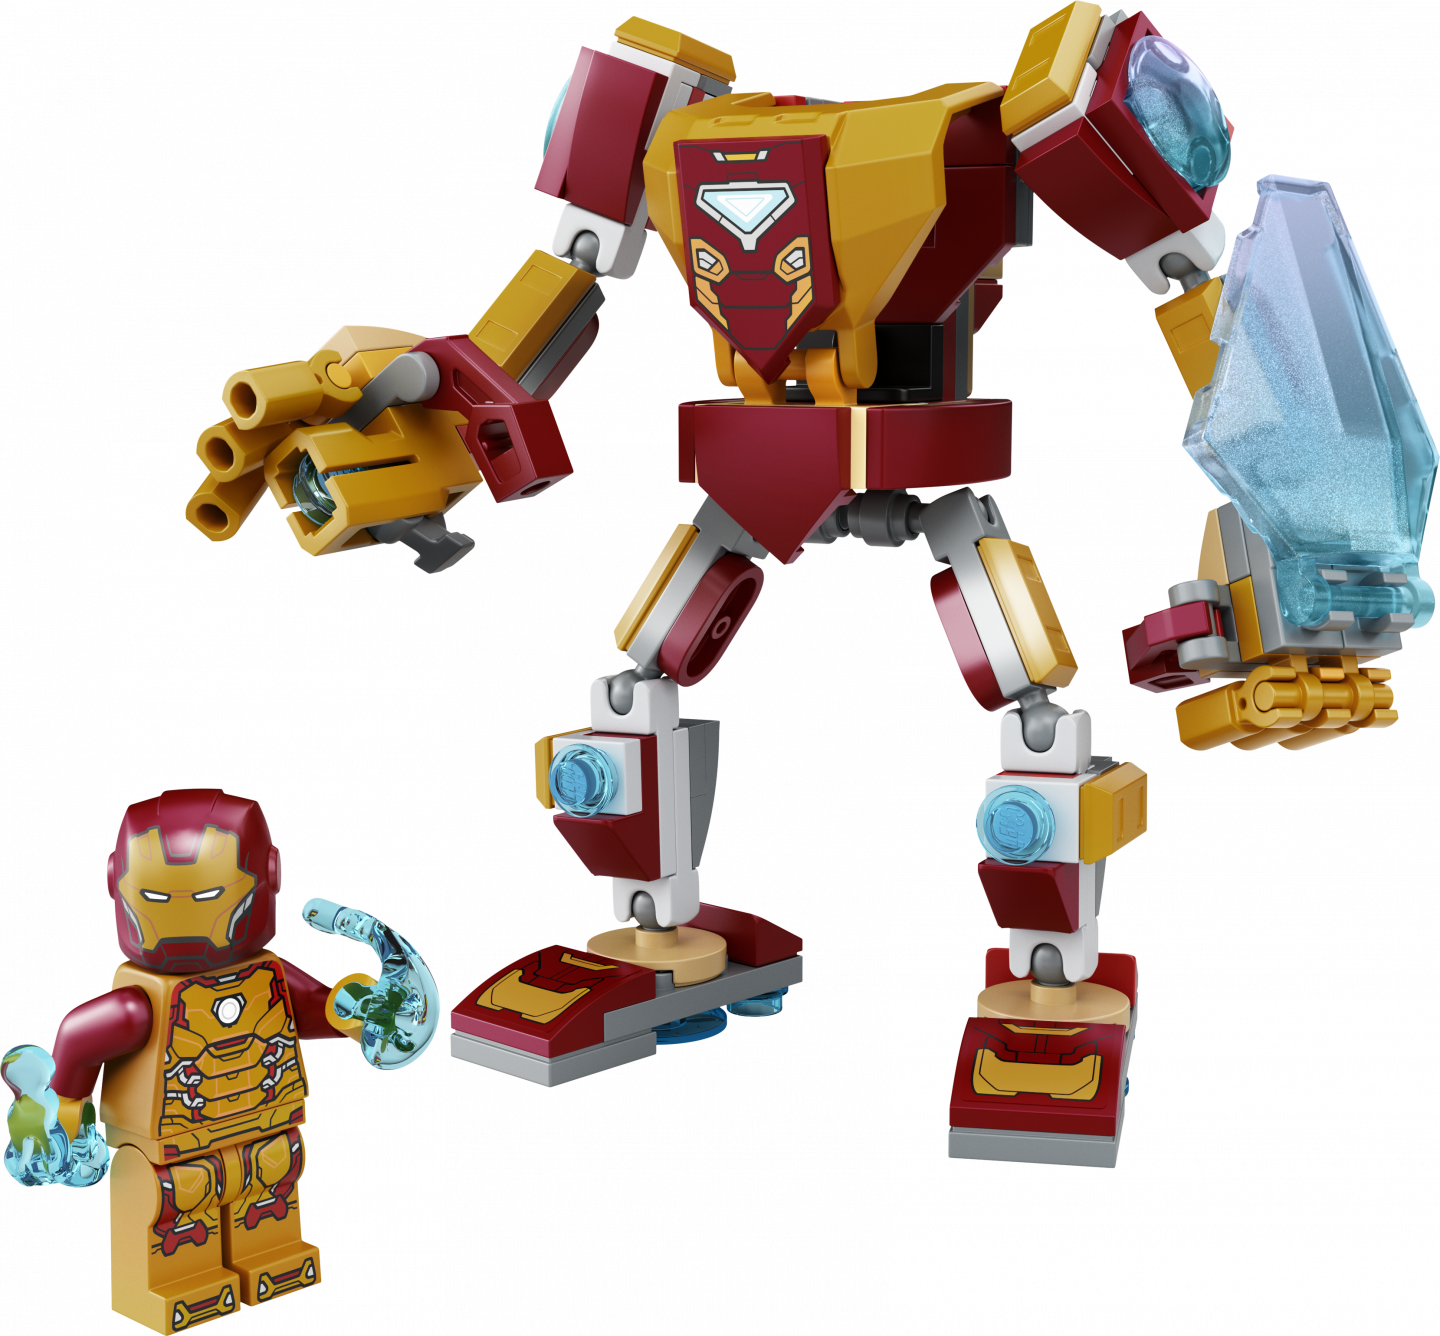 Iron Man mechapantser